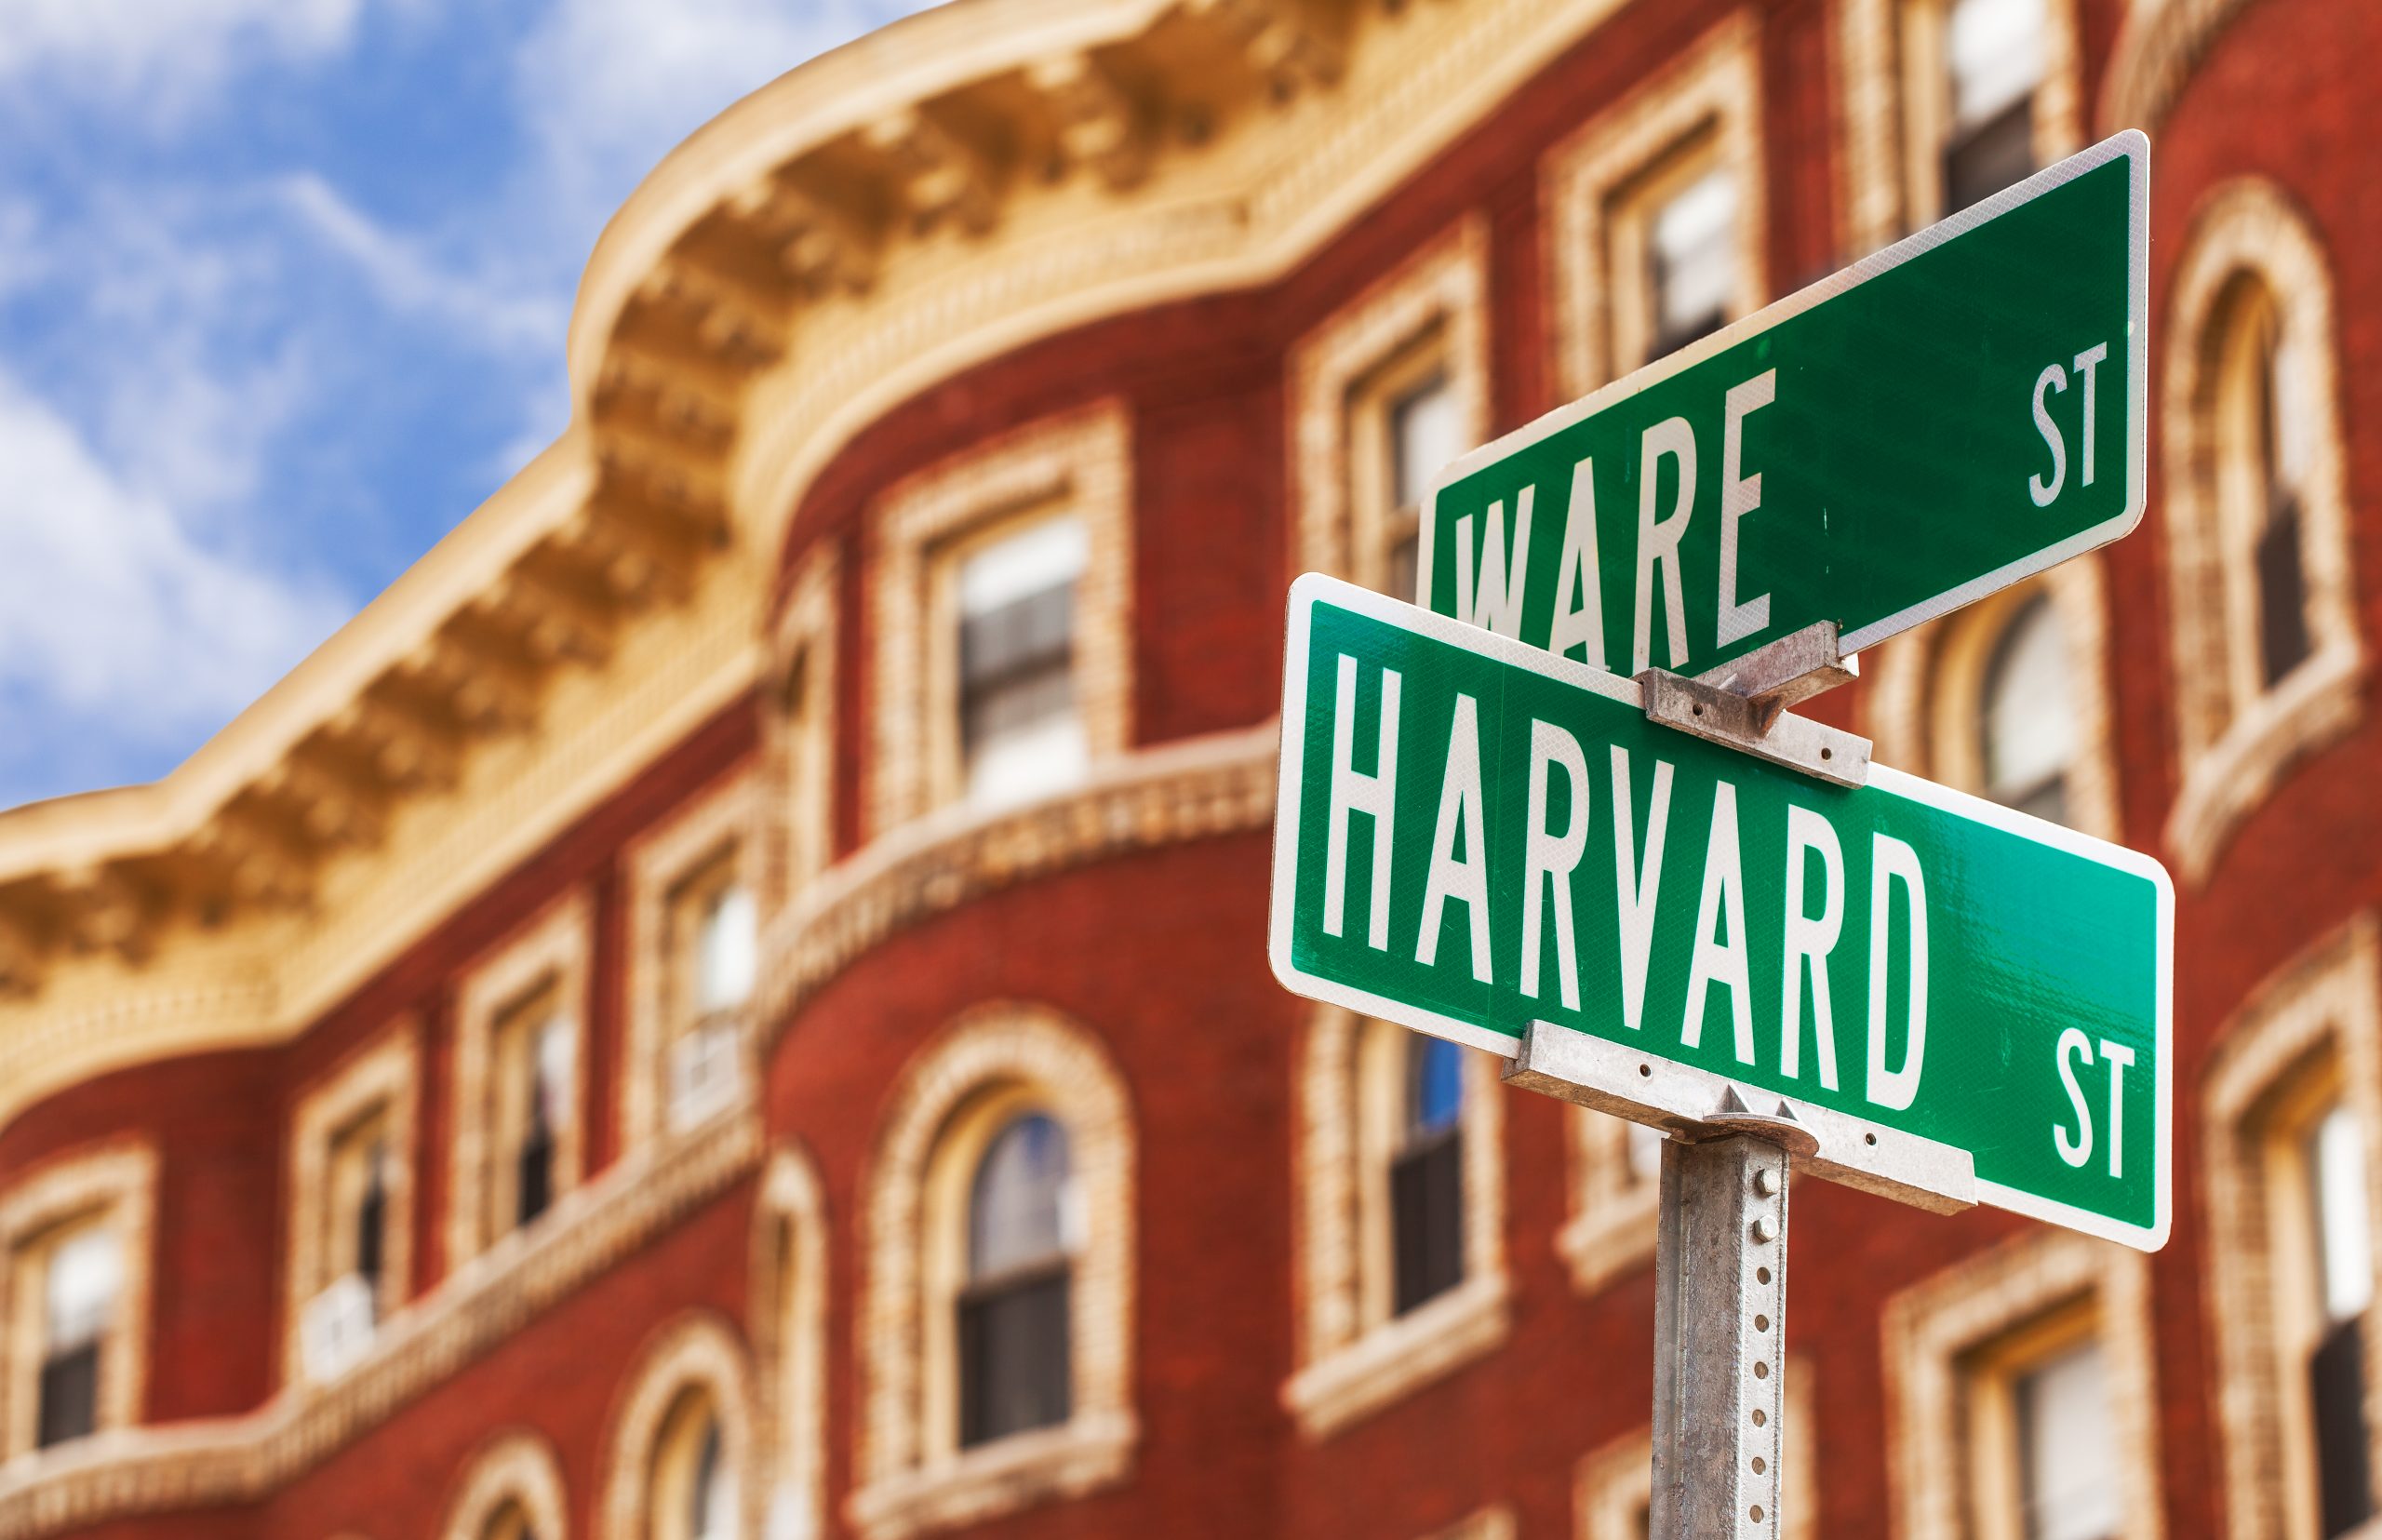 Part 2: Statistical Analysis Admissions Focus on Harvard